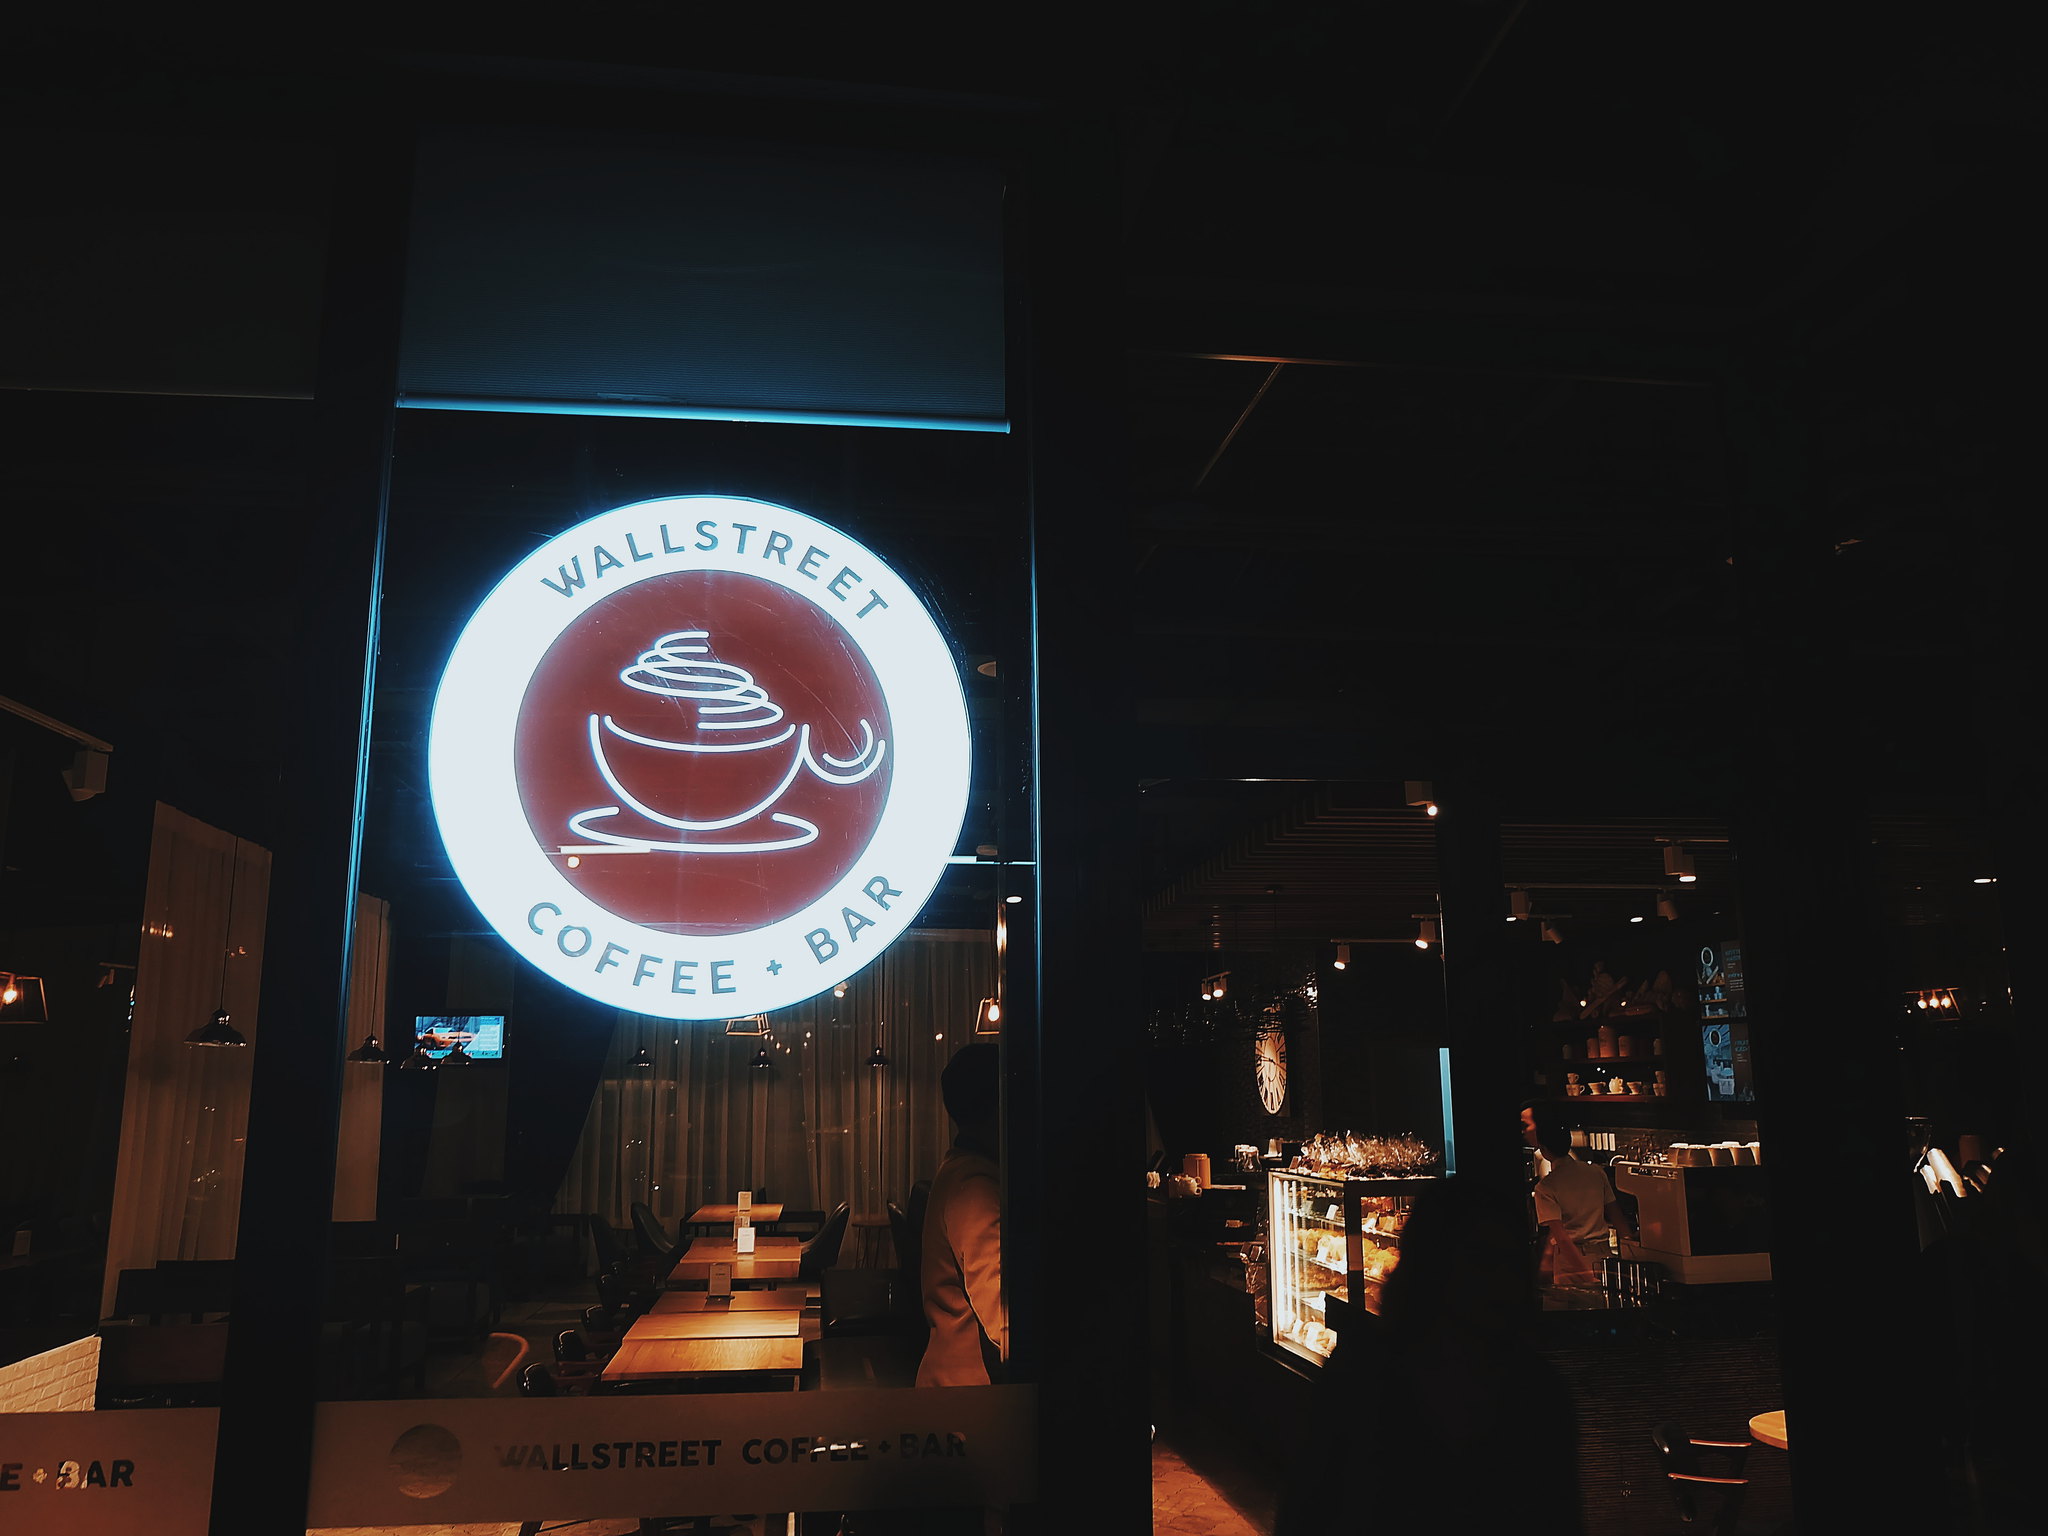 Bai Hotel Cebu Review Wallstreet Coffee Shop